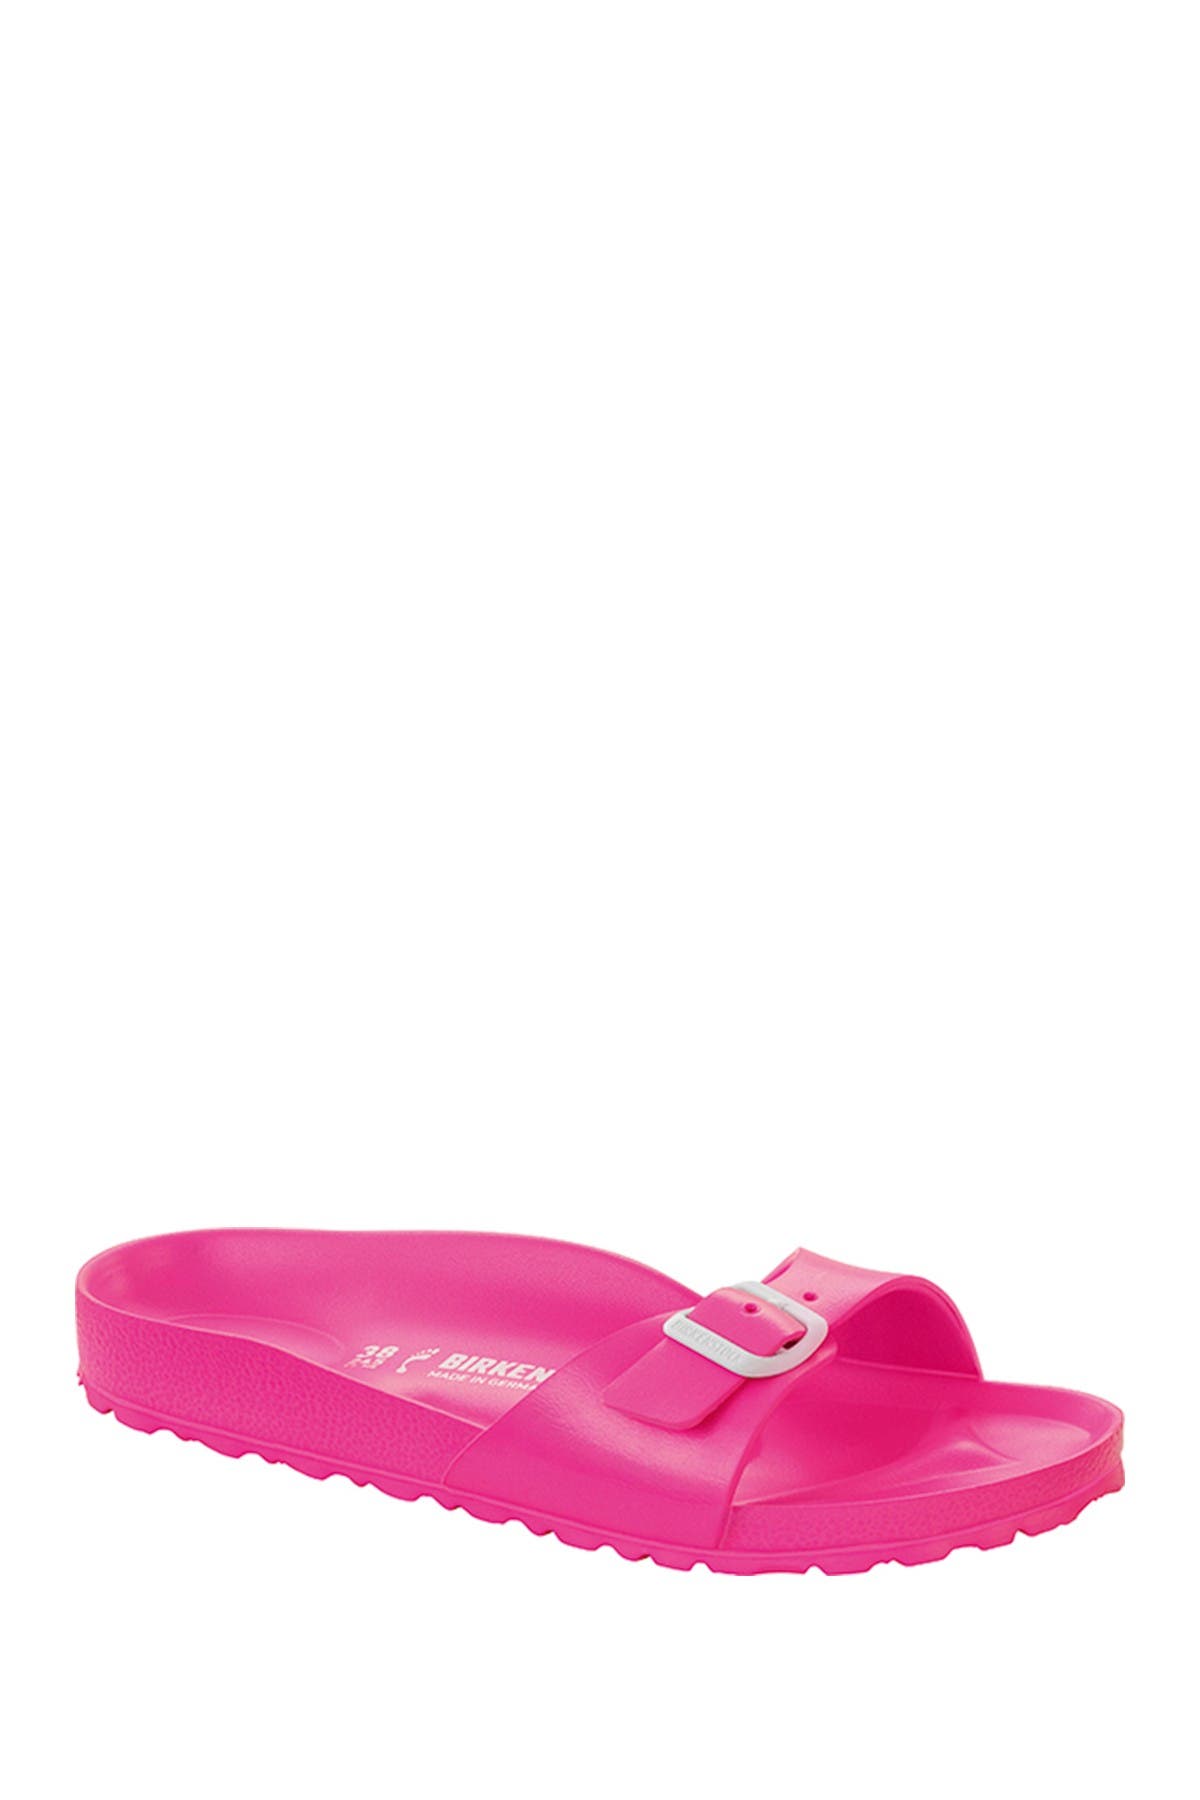 birkenstock waterproof slide sandal